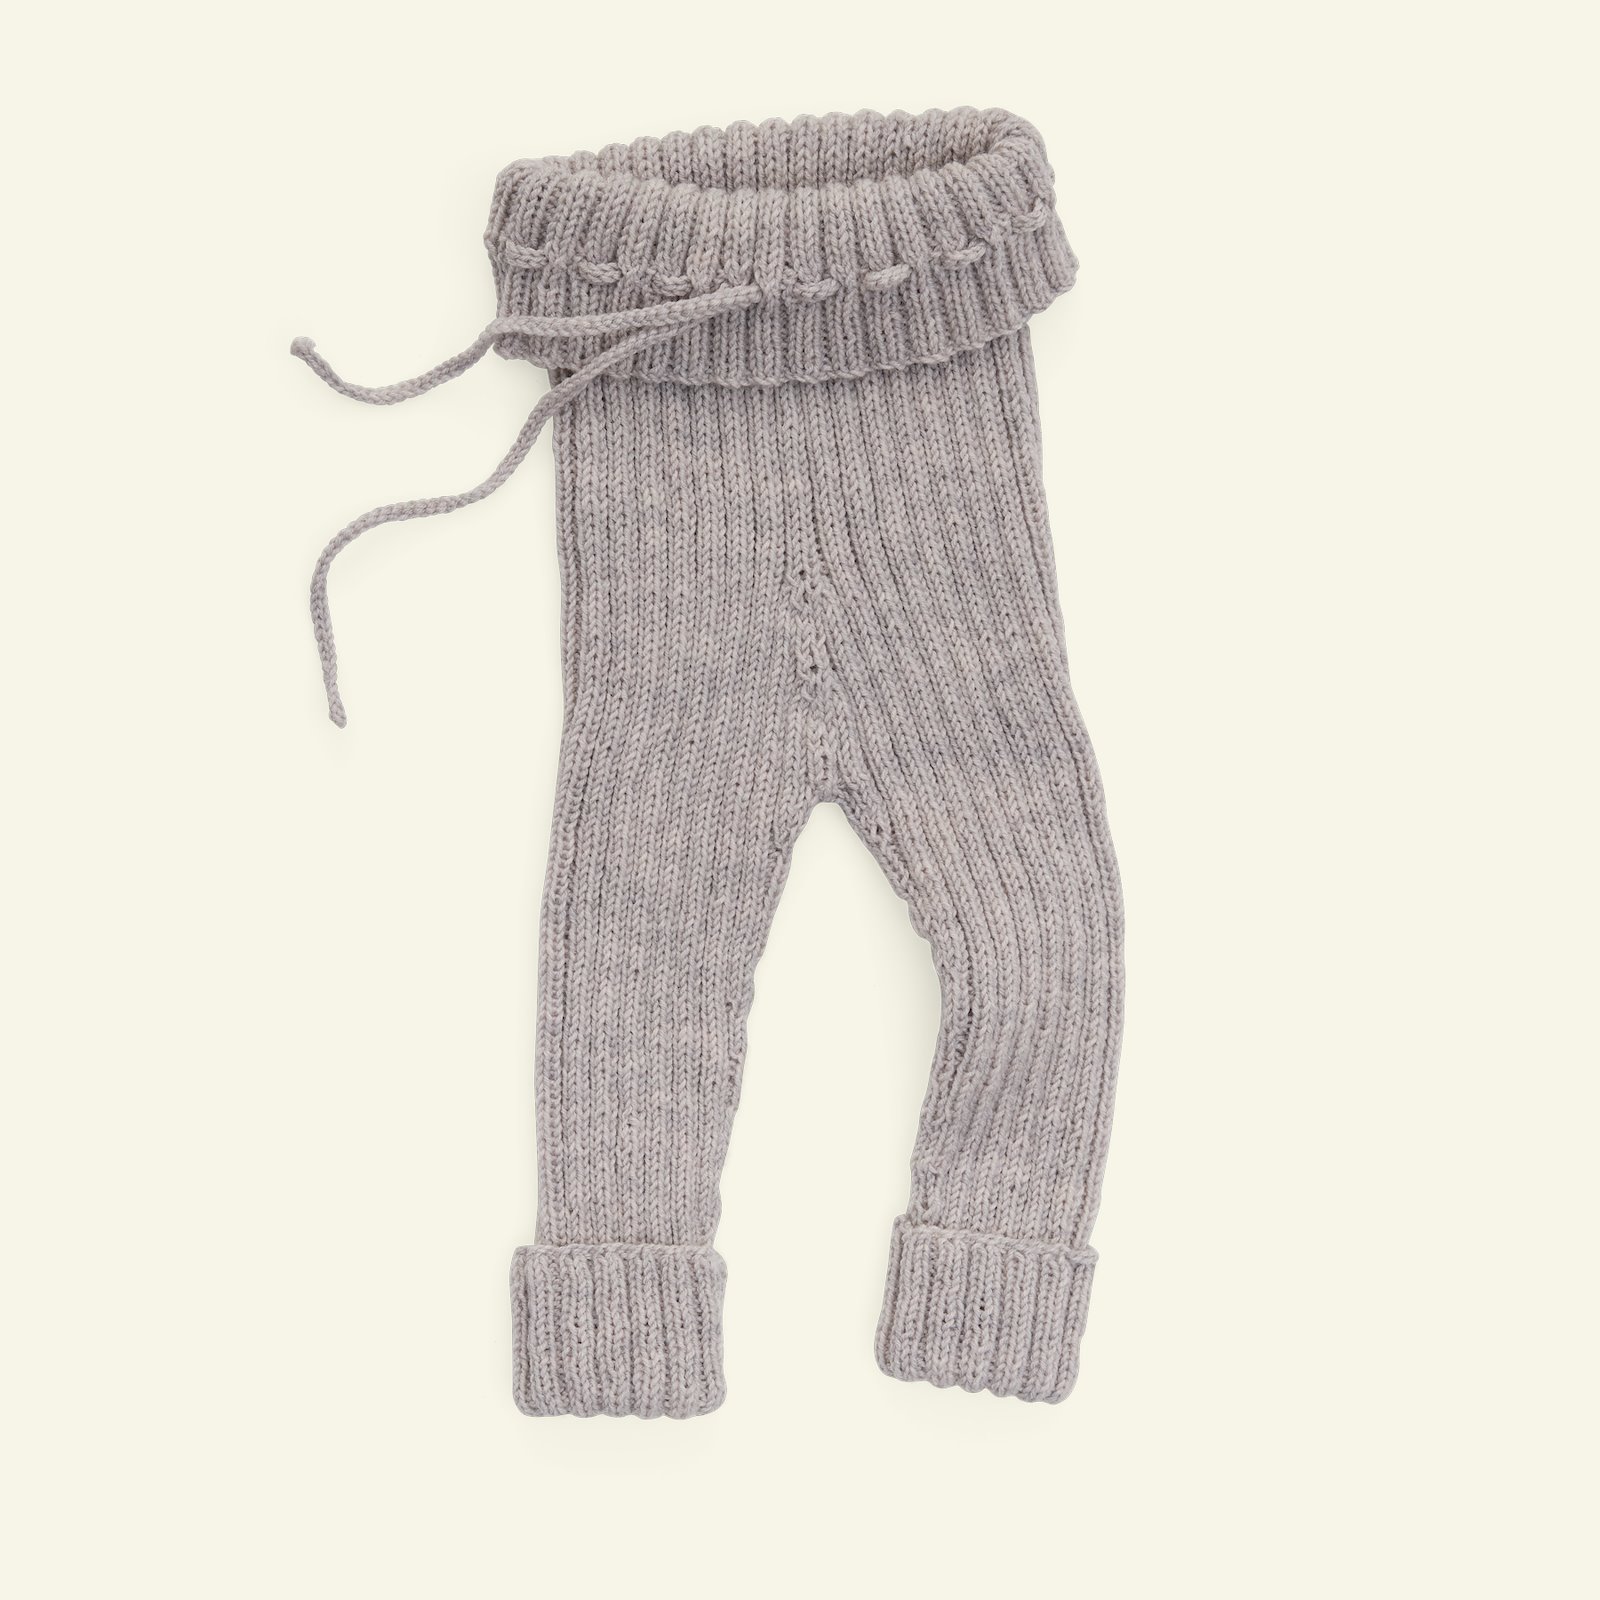 FRAYA knitting pattern – Dishy legs baby tights - Delicate FRAYA6057_image_b.png